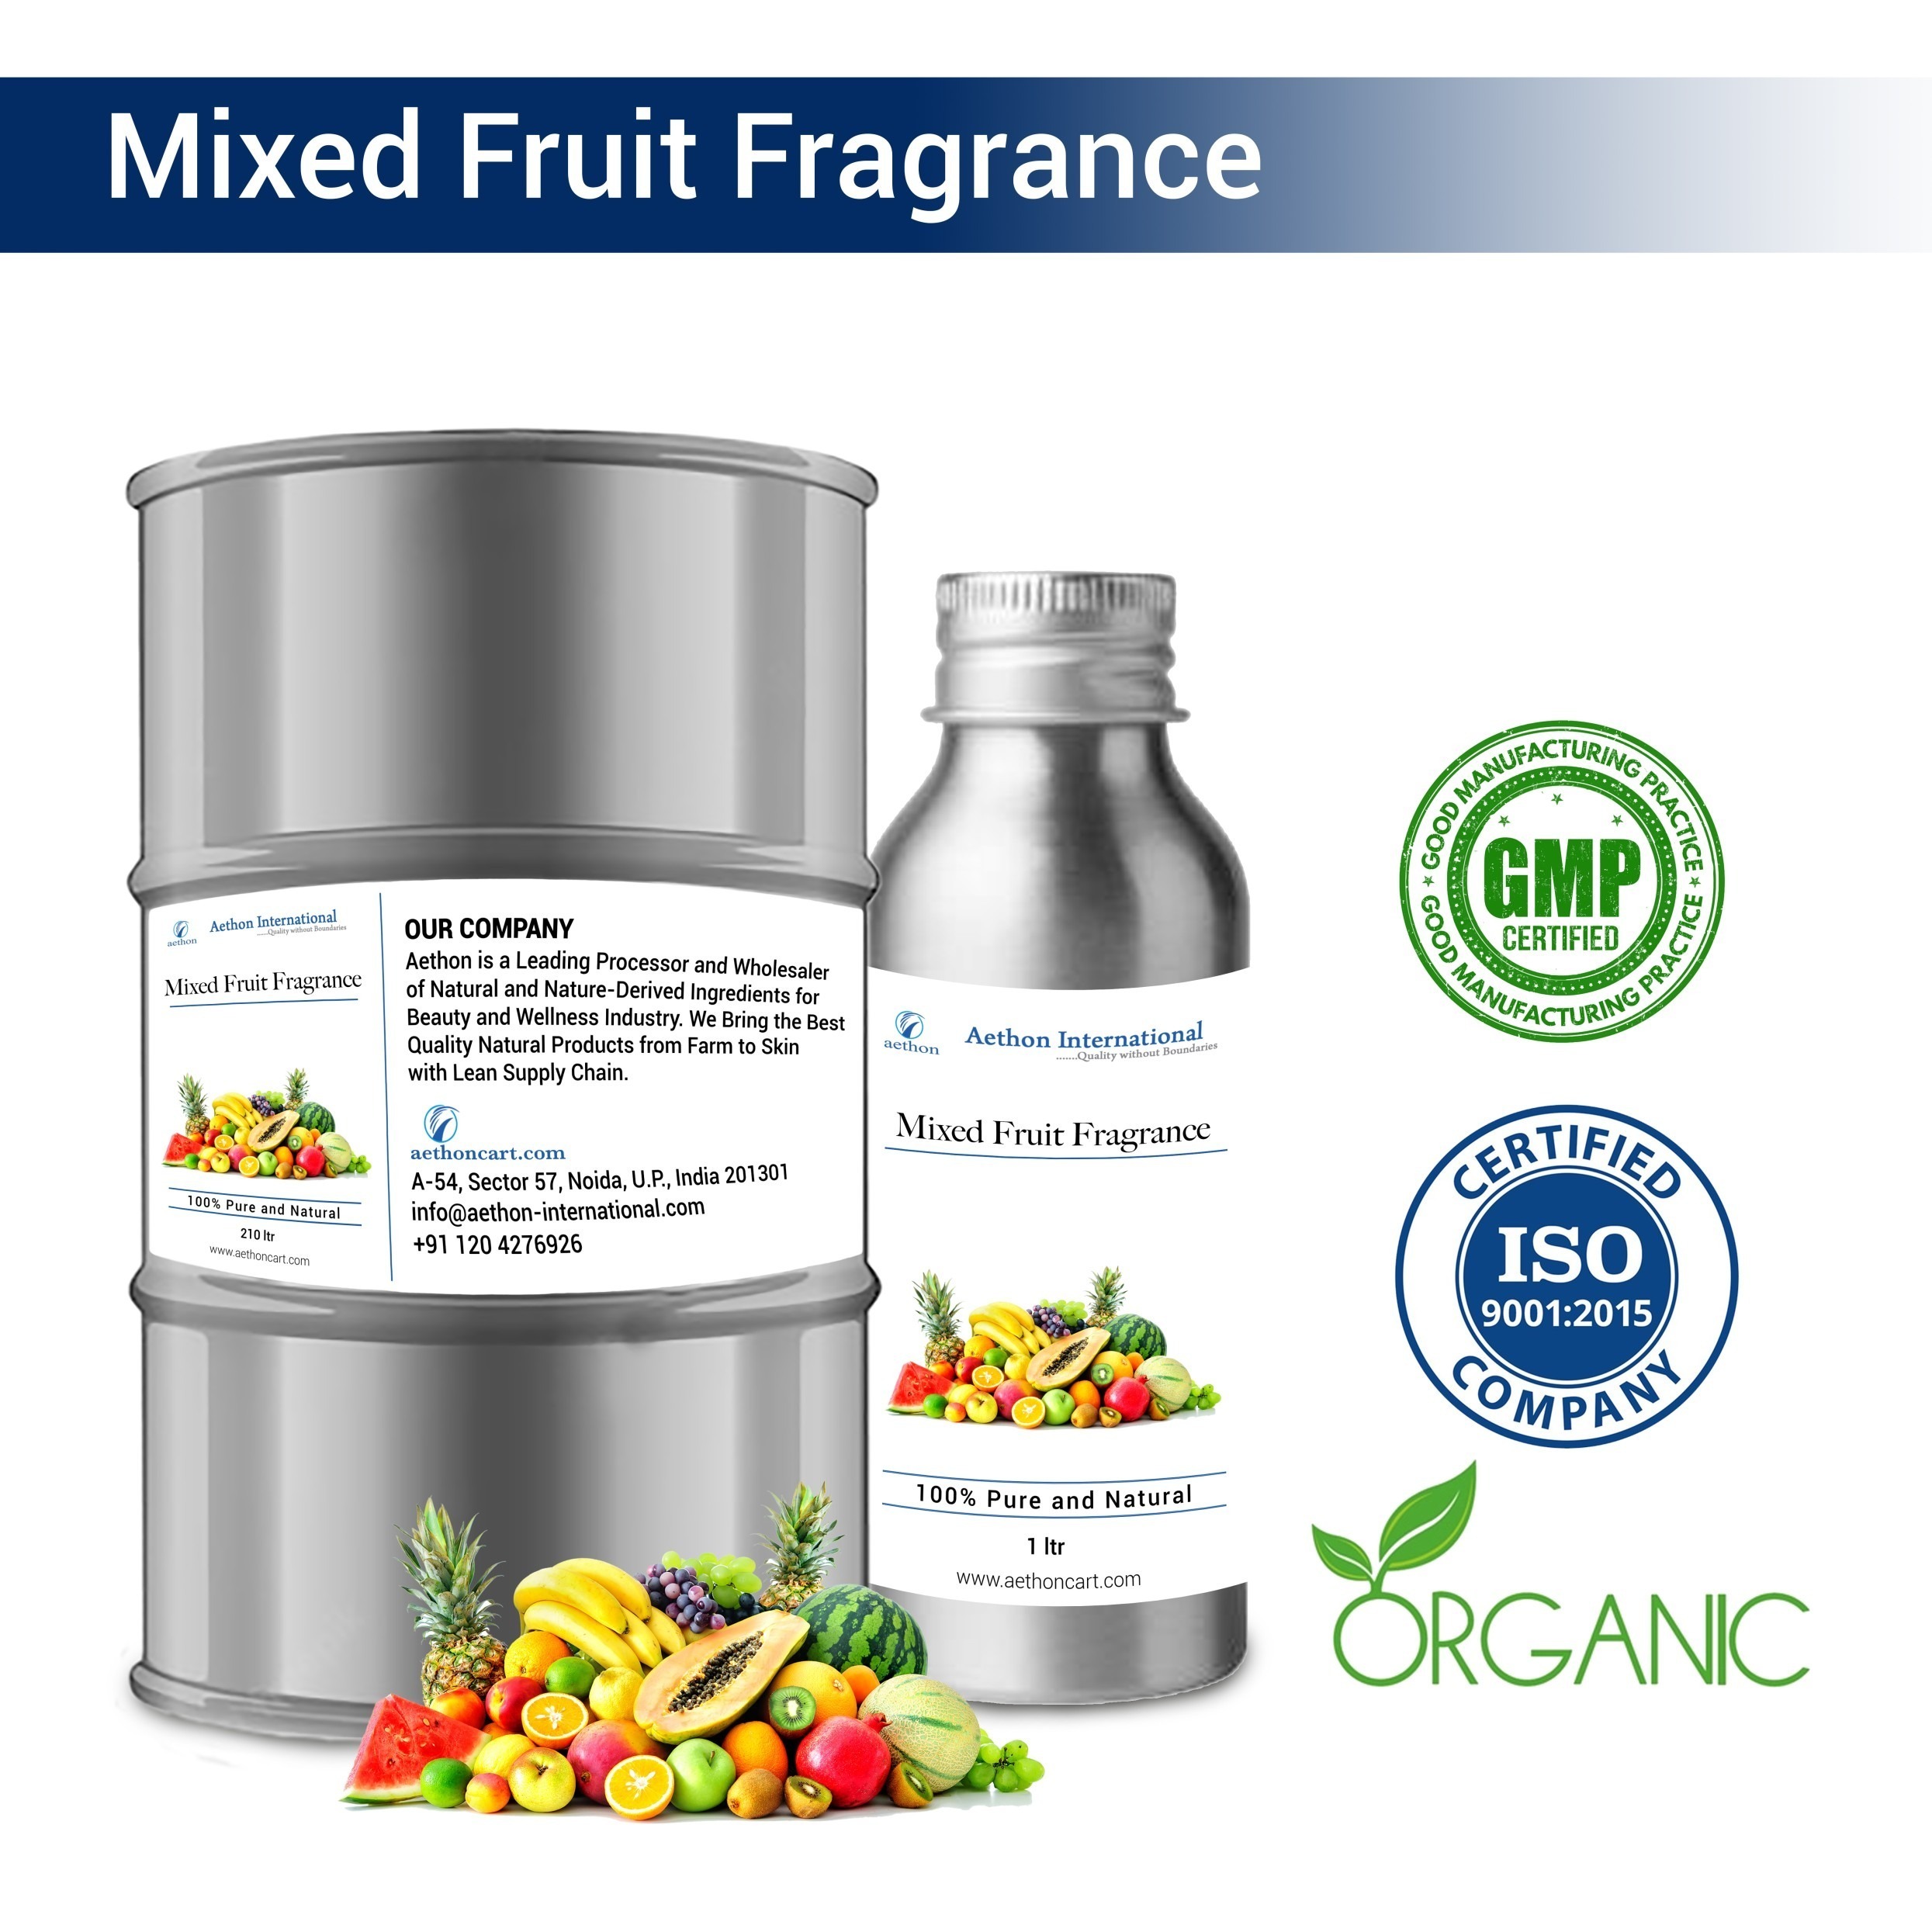 Mixed Fruit Fragrance